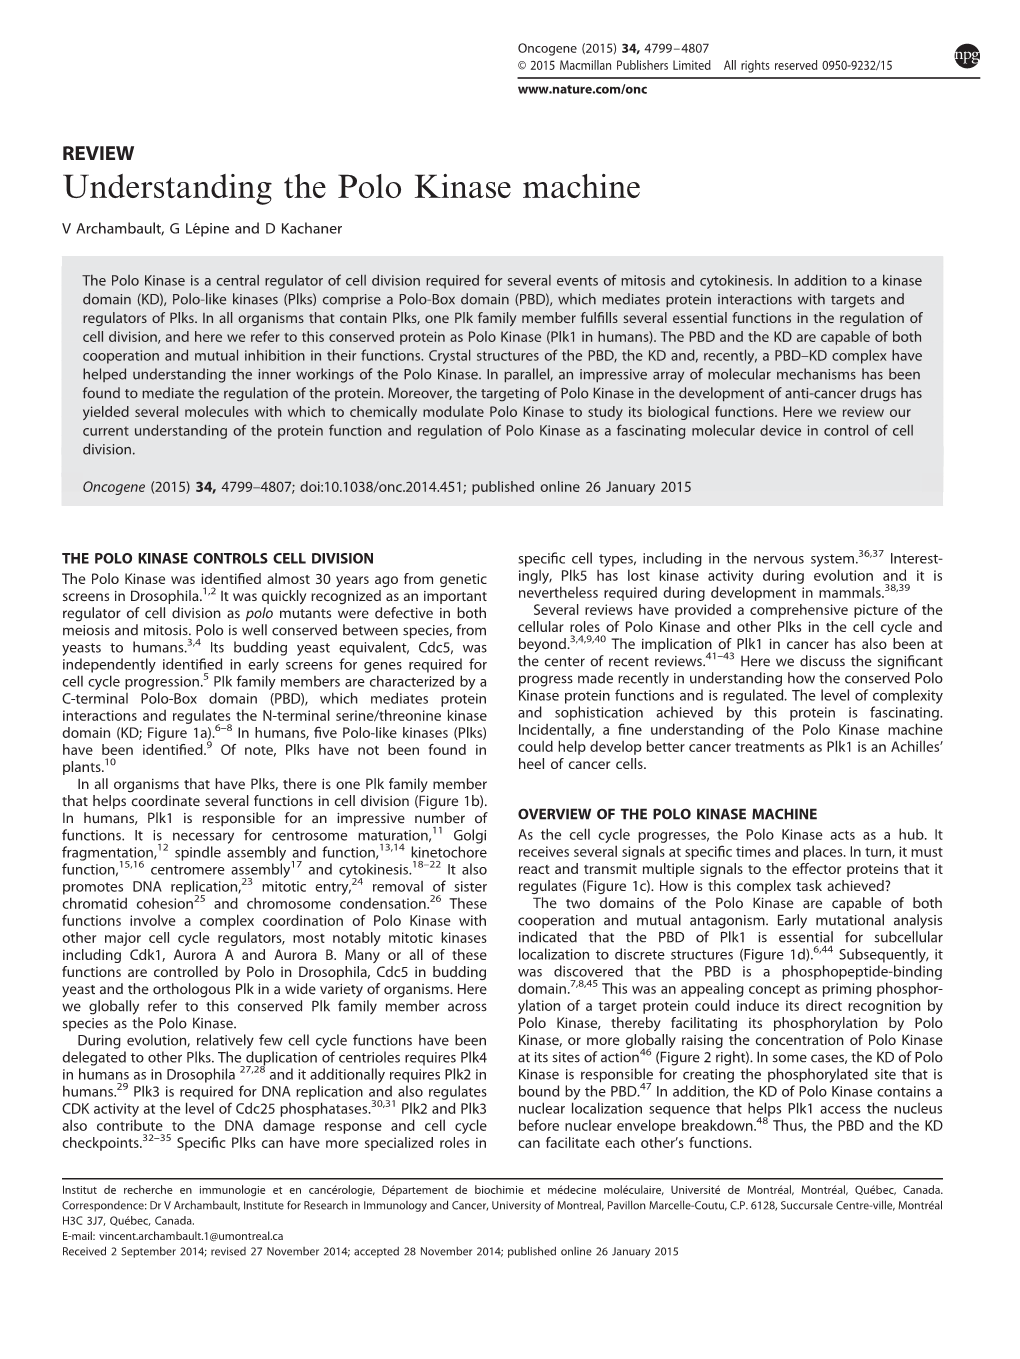 Understanding the Polo Kinase Machine